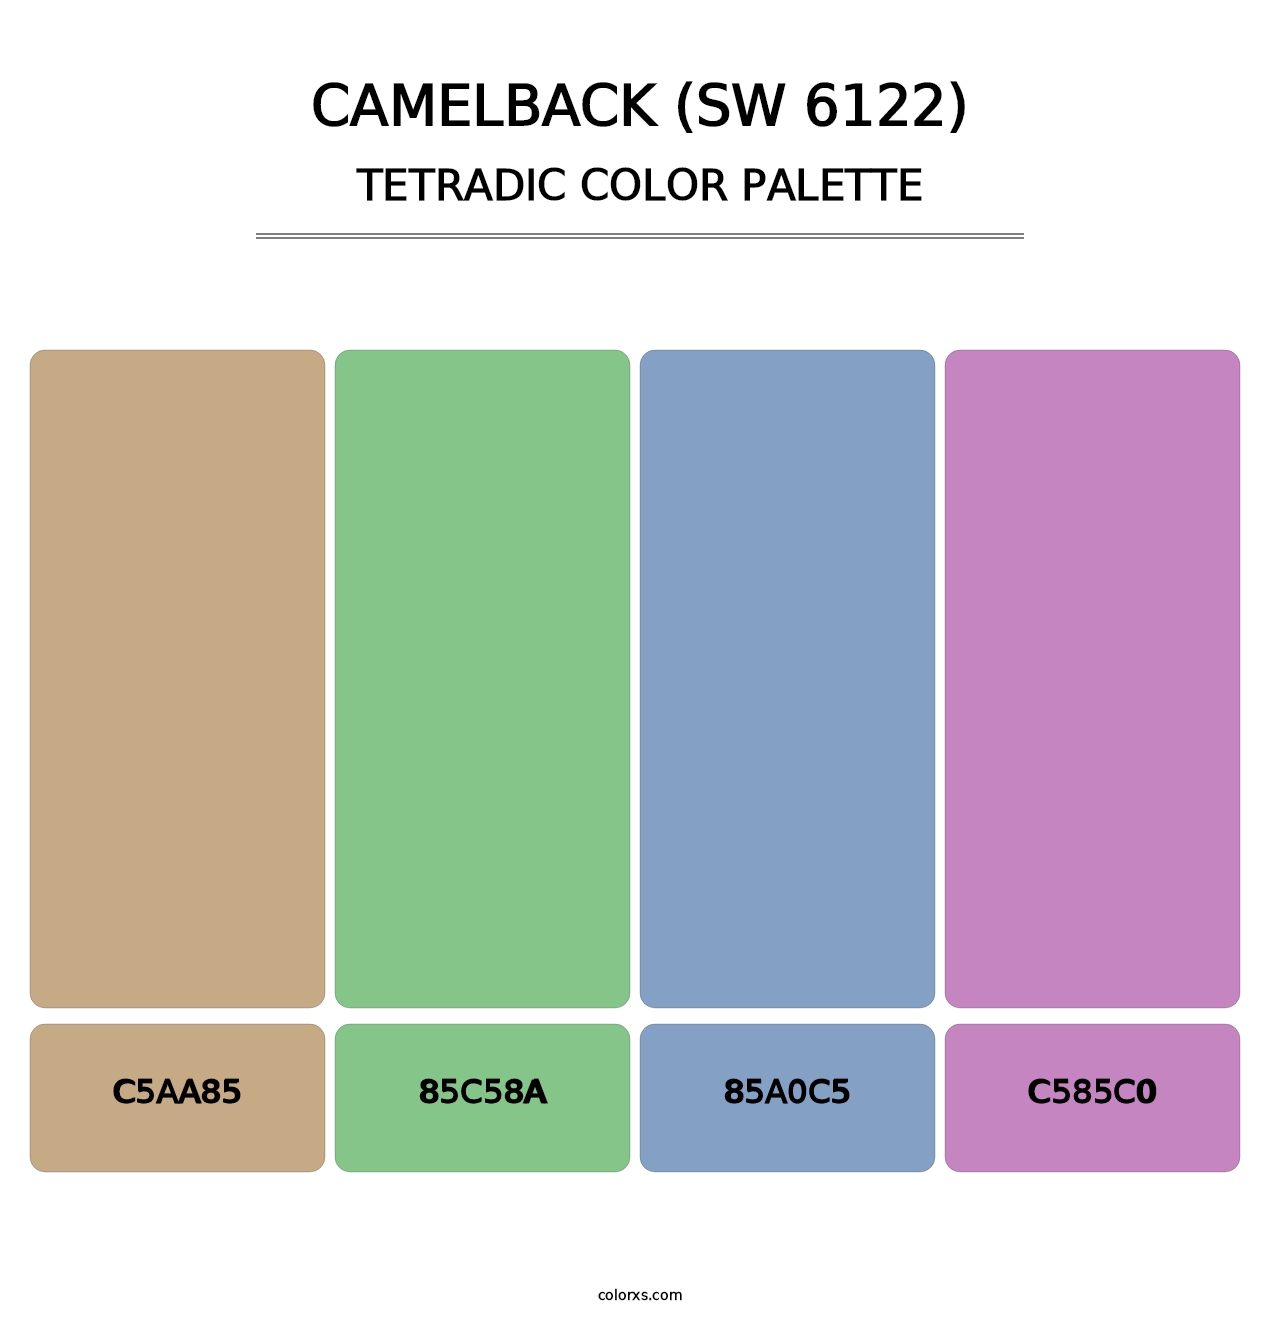 Camelback (SW 6122) - Tetradic Color Palette